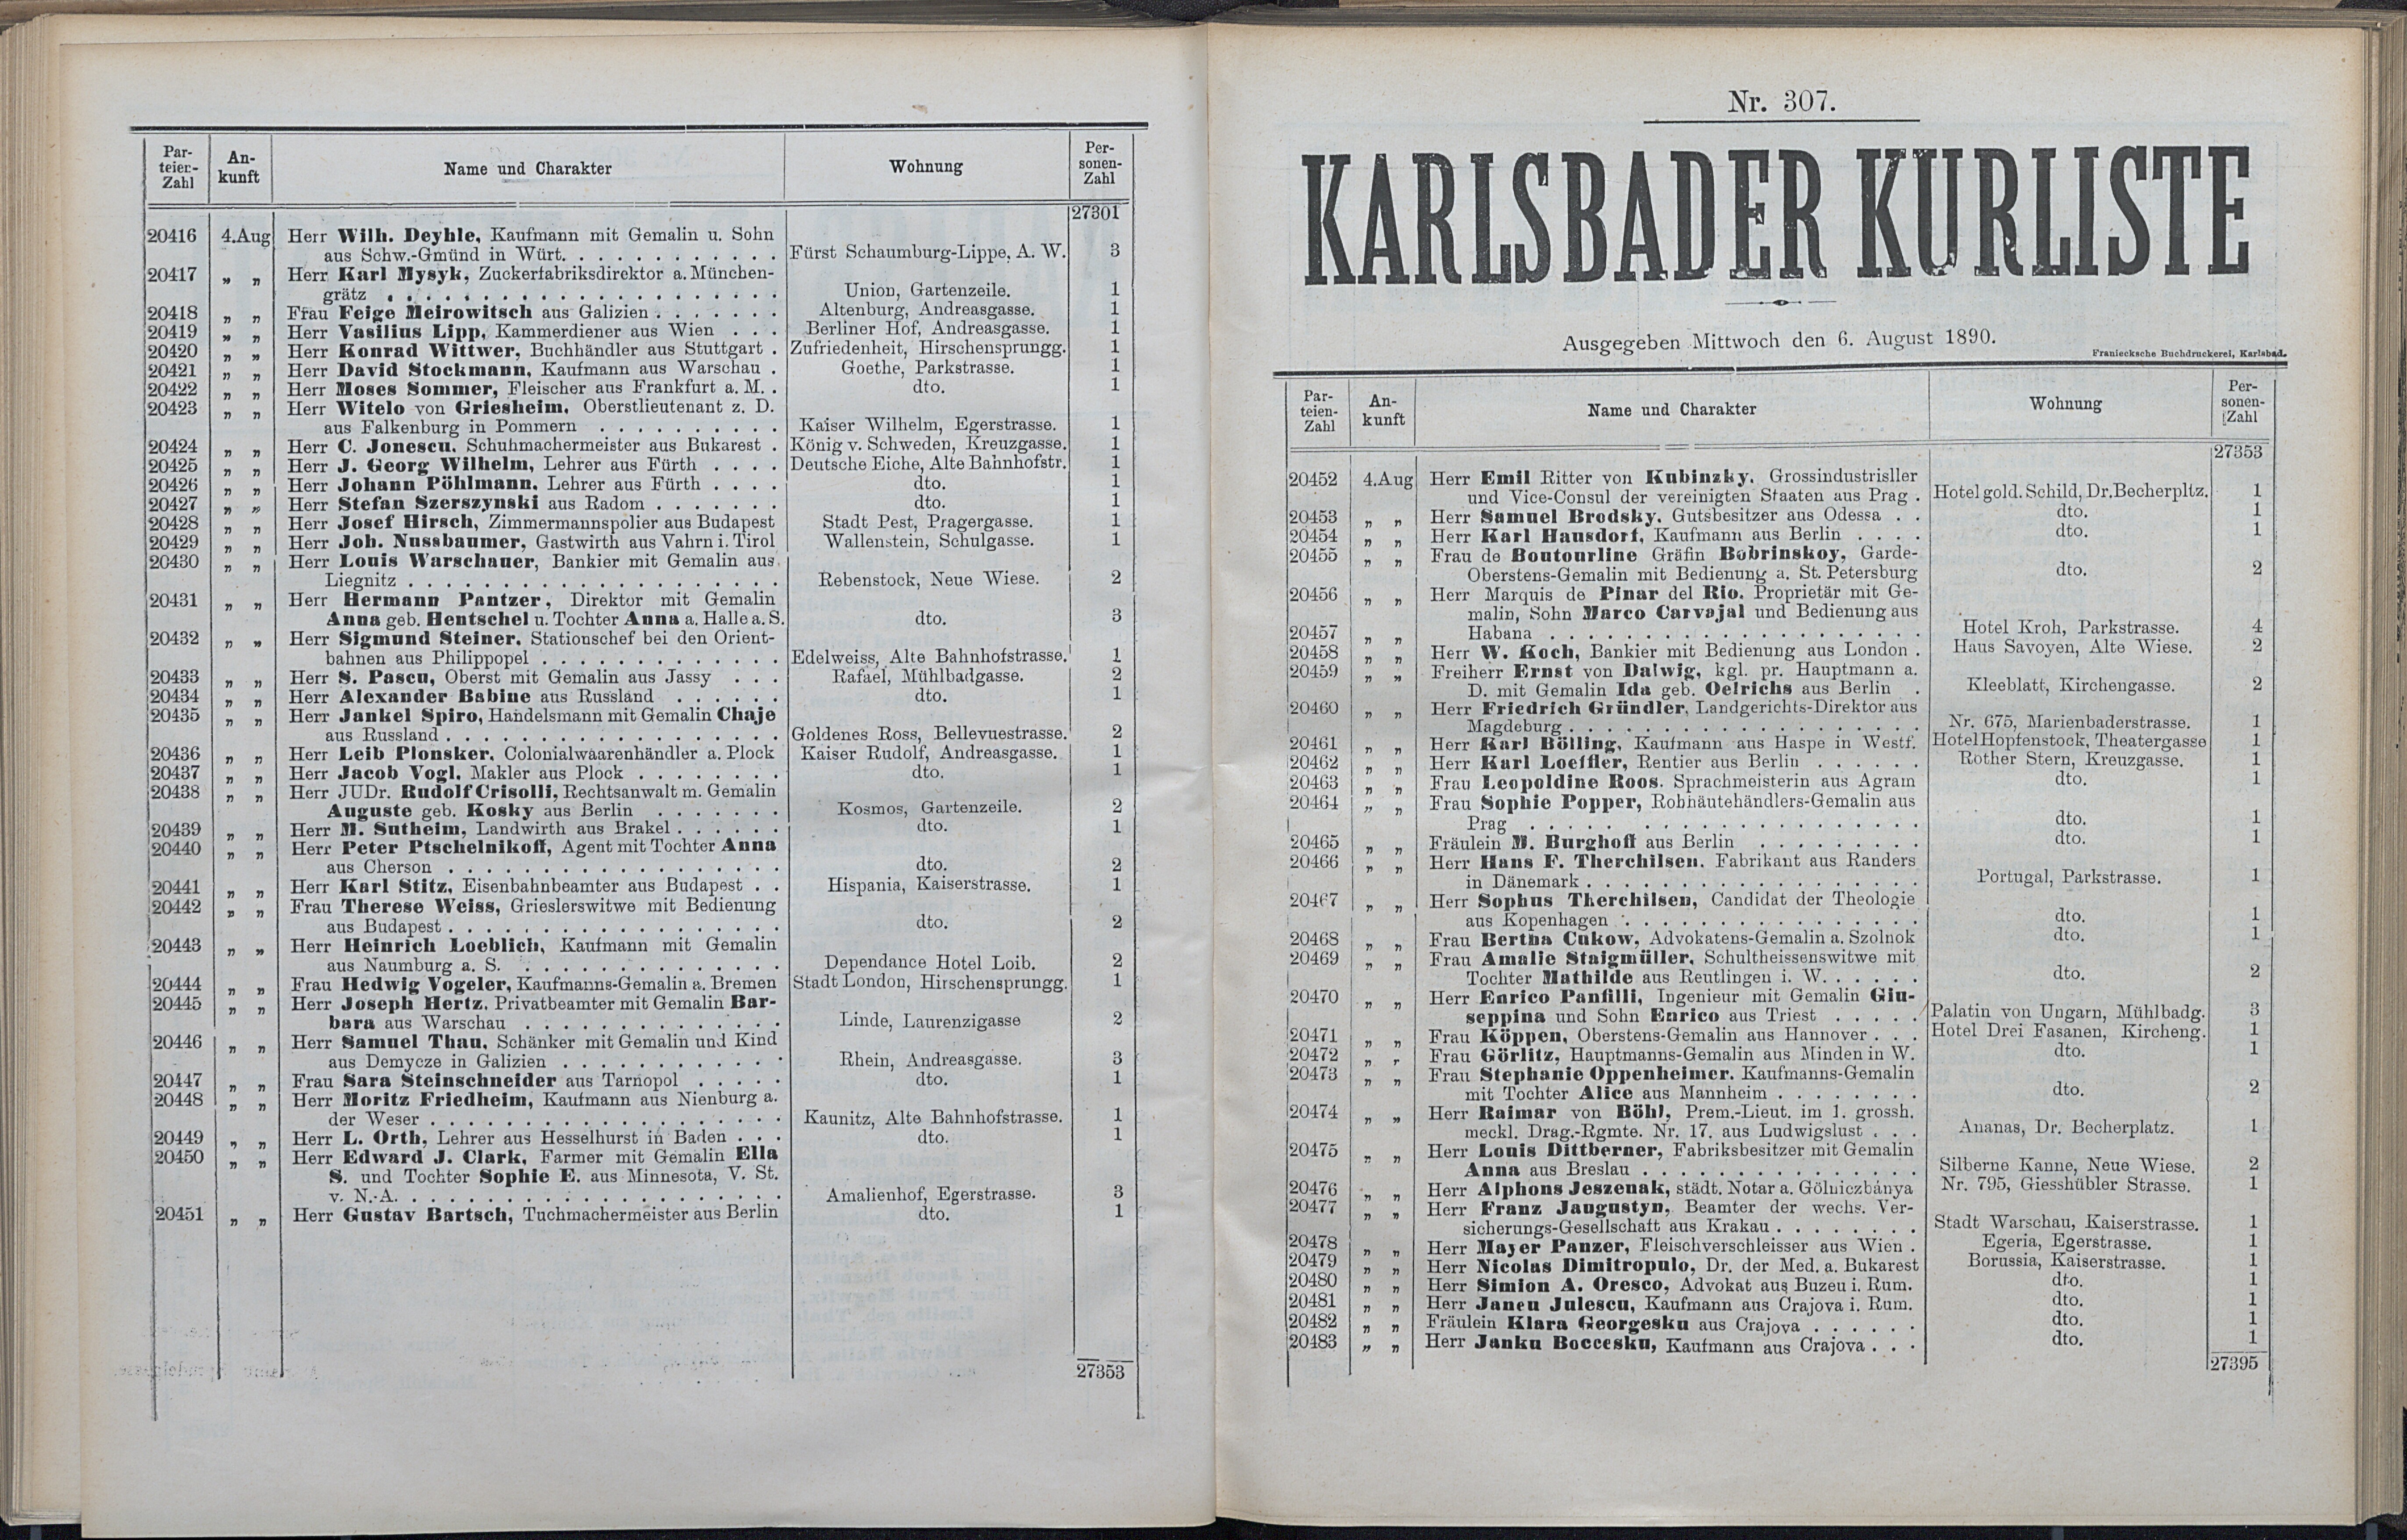 326. soap-kv_knihovna_karlsbader-kurliste-1890_3270